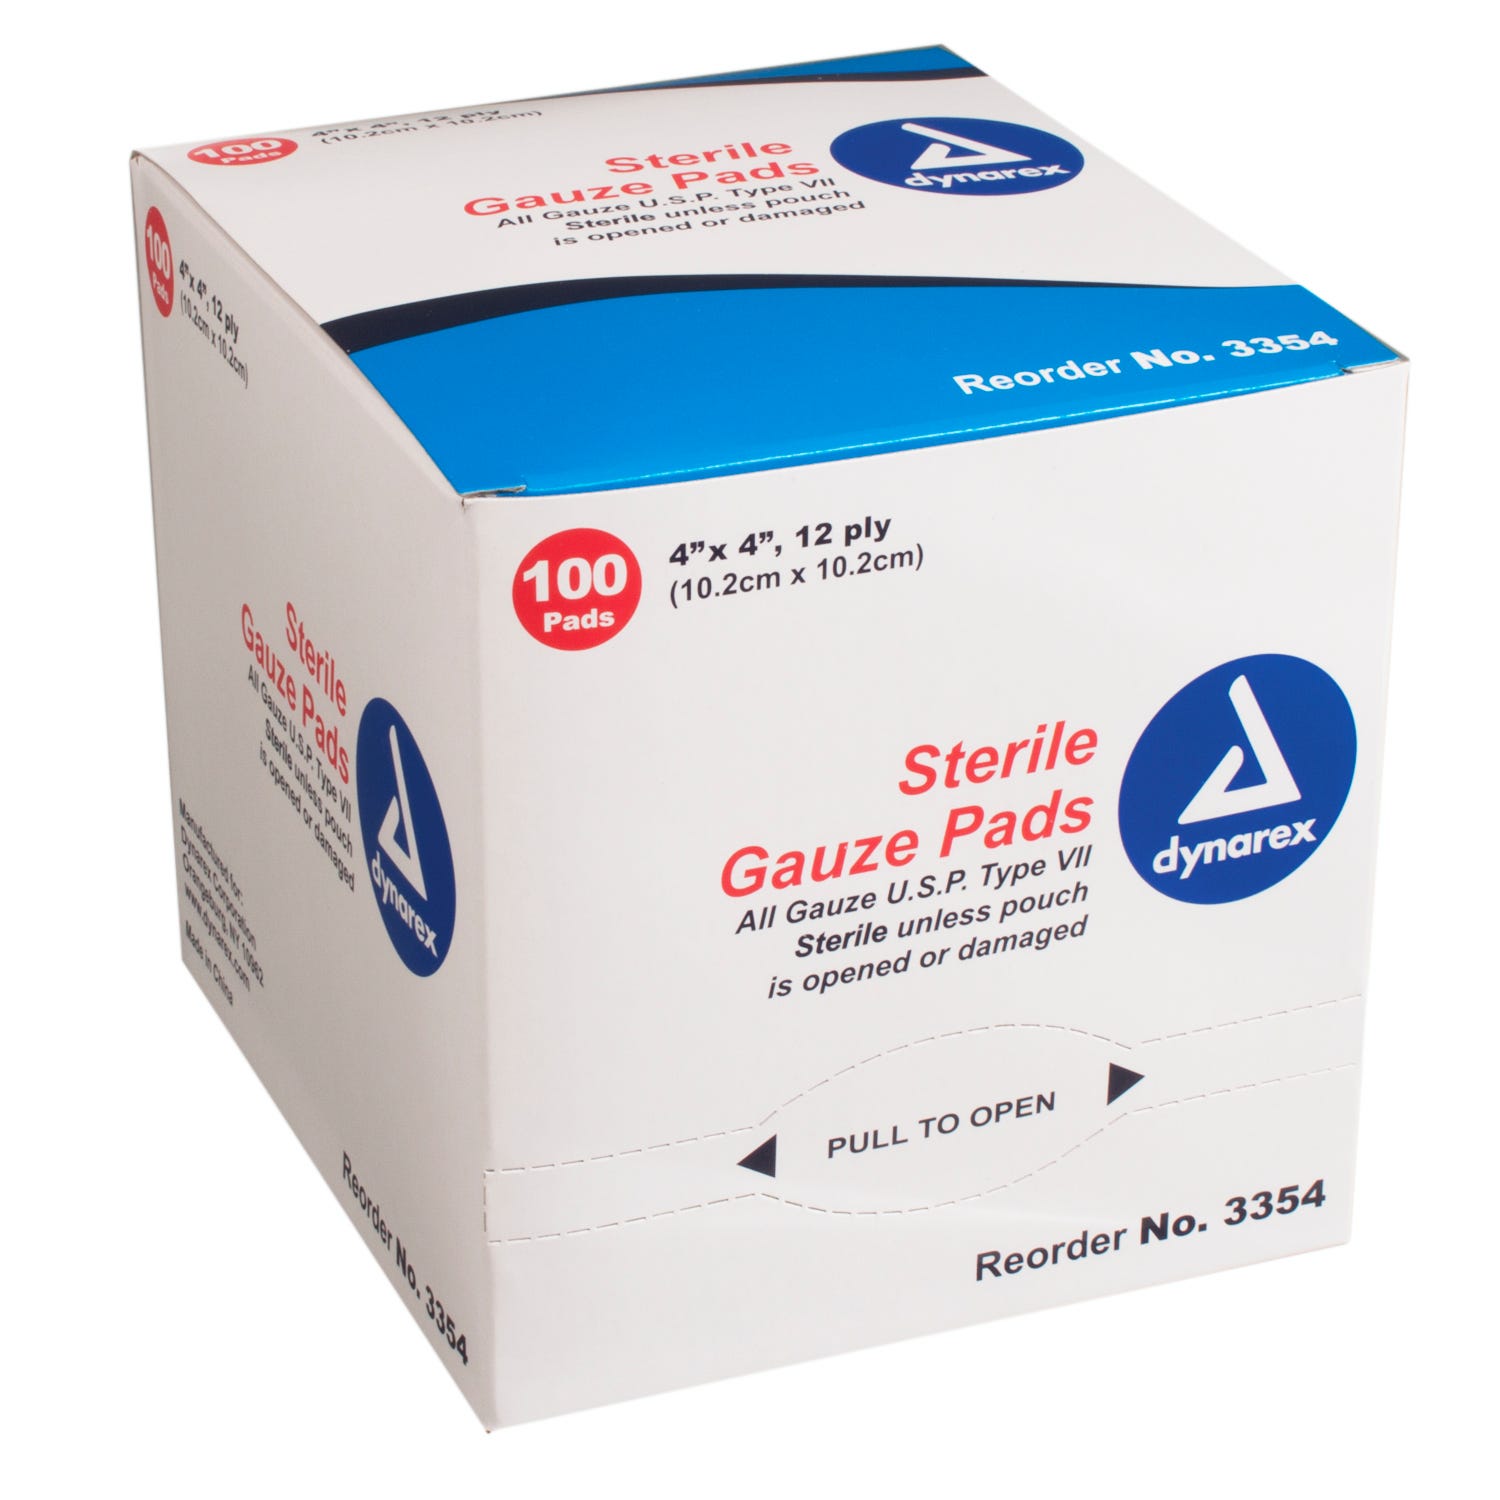 Sterile Gauze Pads - 4" x 4", 12-ply, 100/Box